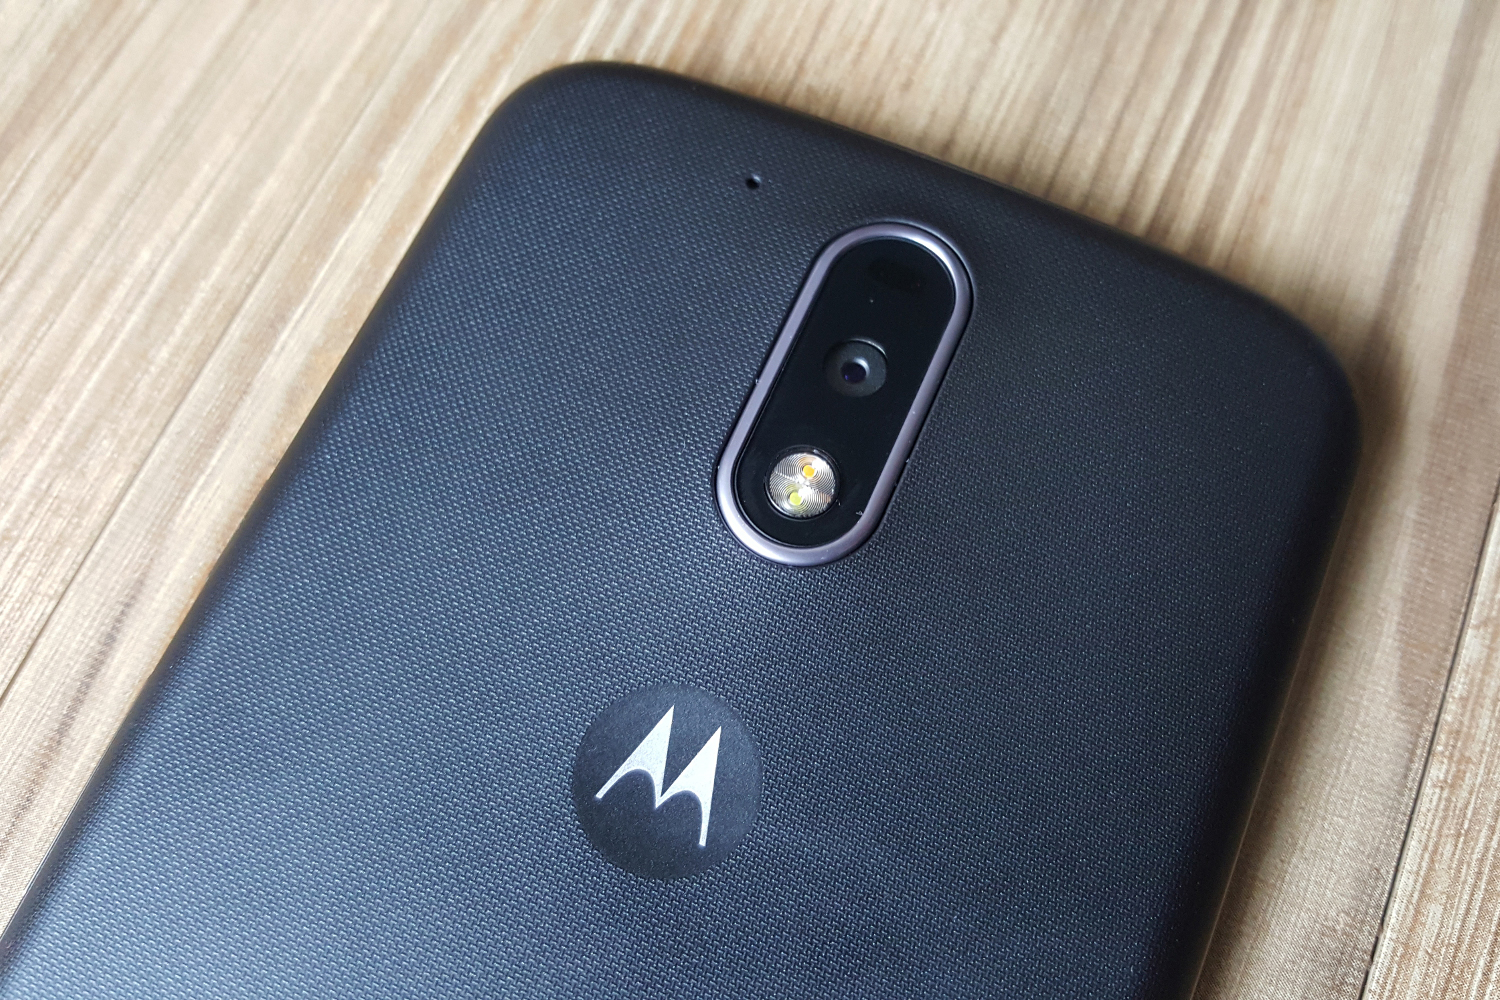 Motorola Moto G4 Play CustomROM /e/ - komplett ohne Google! in